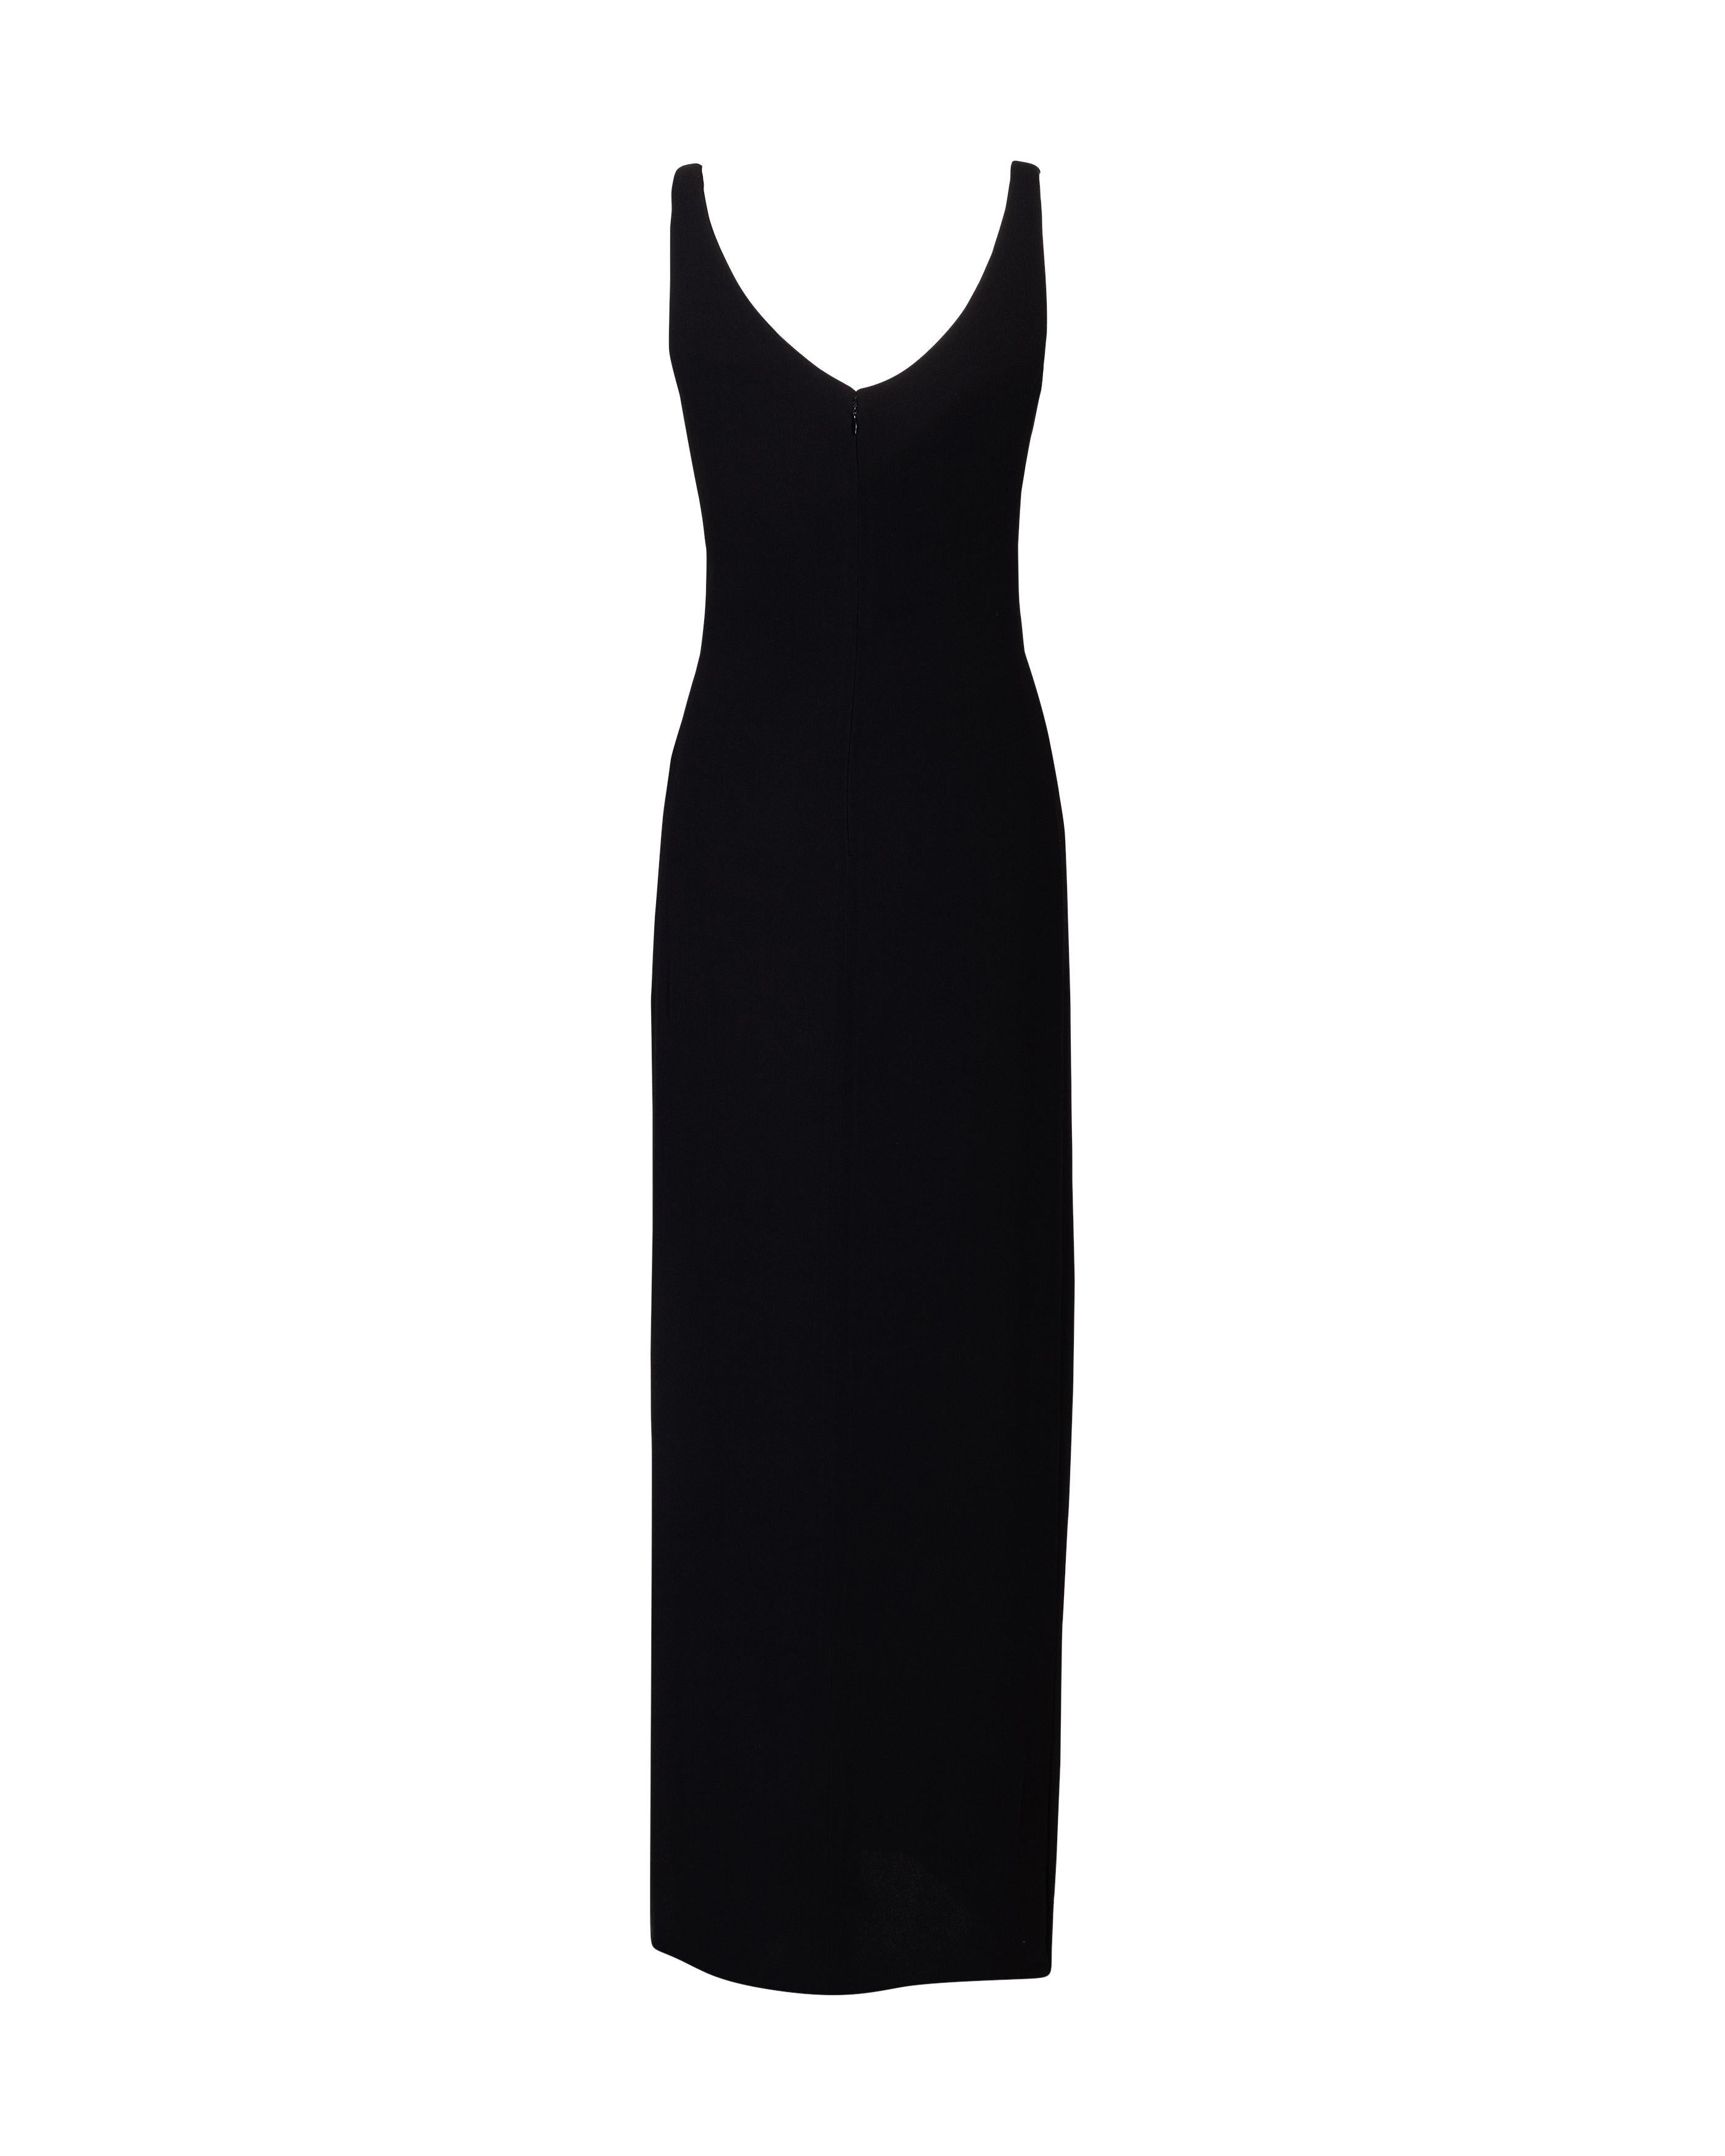 A/W 1998 Valentino Boutique Black Drape Mesh Bustier Gown 1